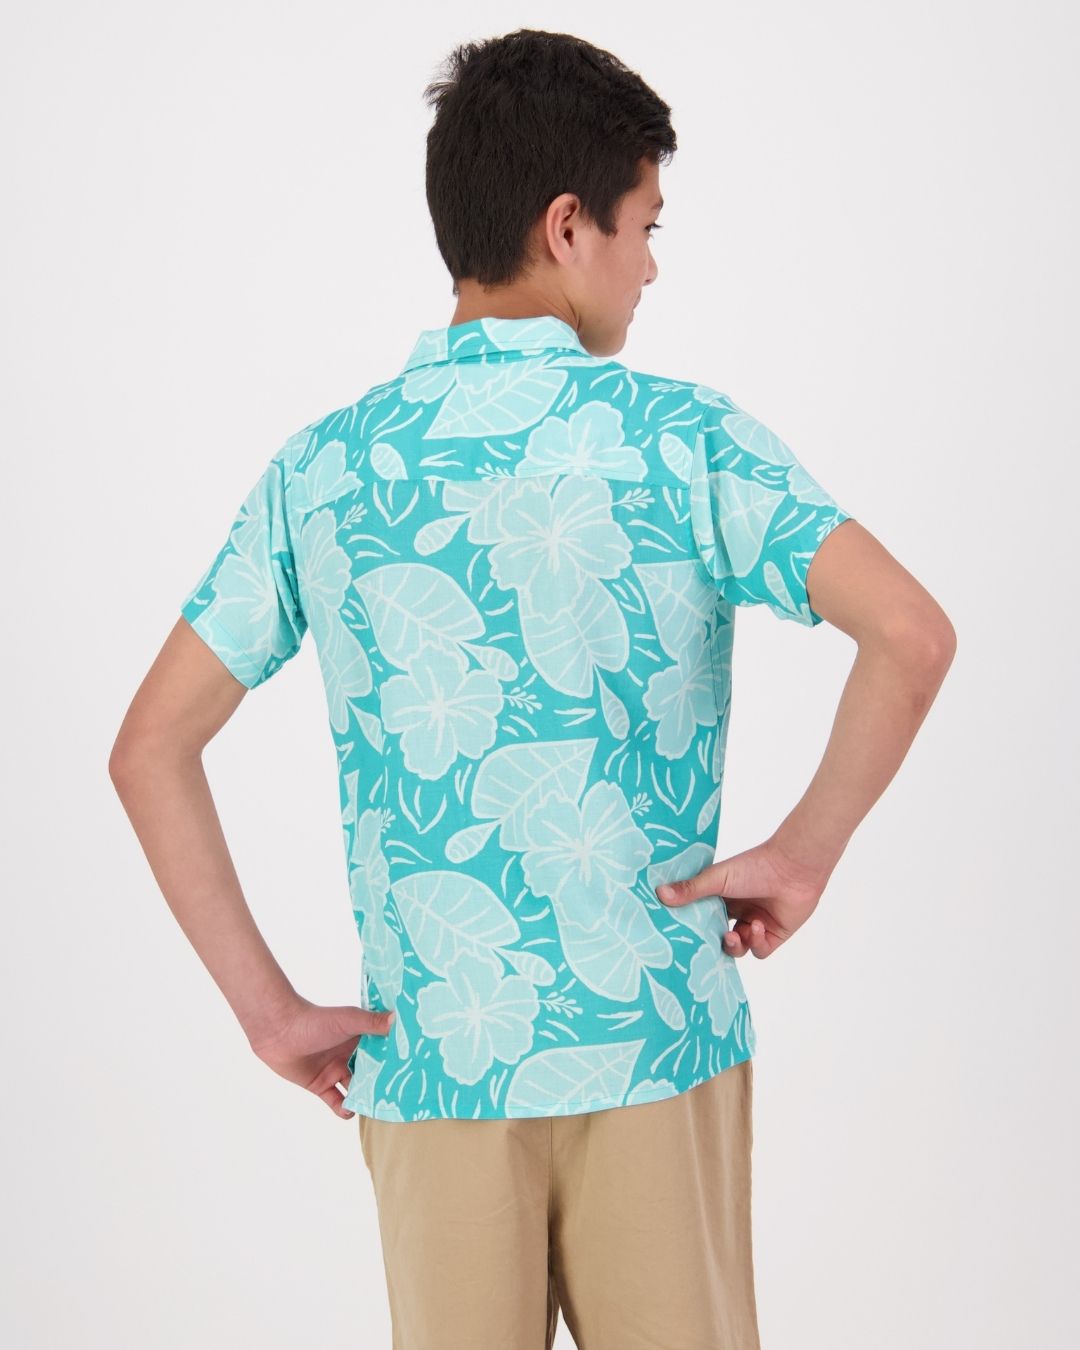 Kanoa Short Sleeve Teen Island Shirt - Royal Hibiscus Tide - Blue